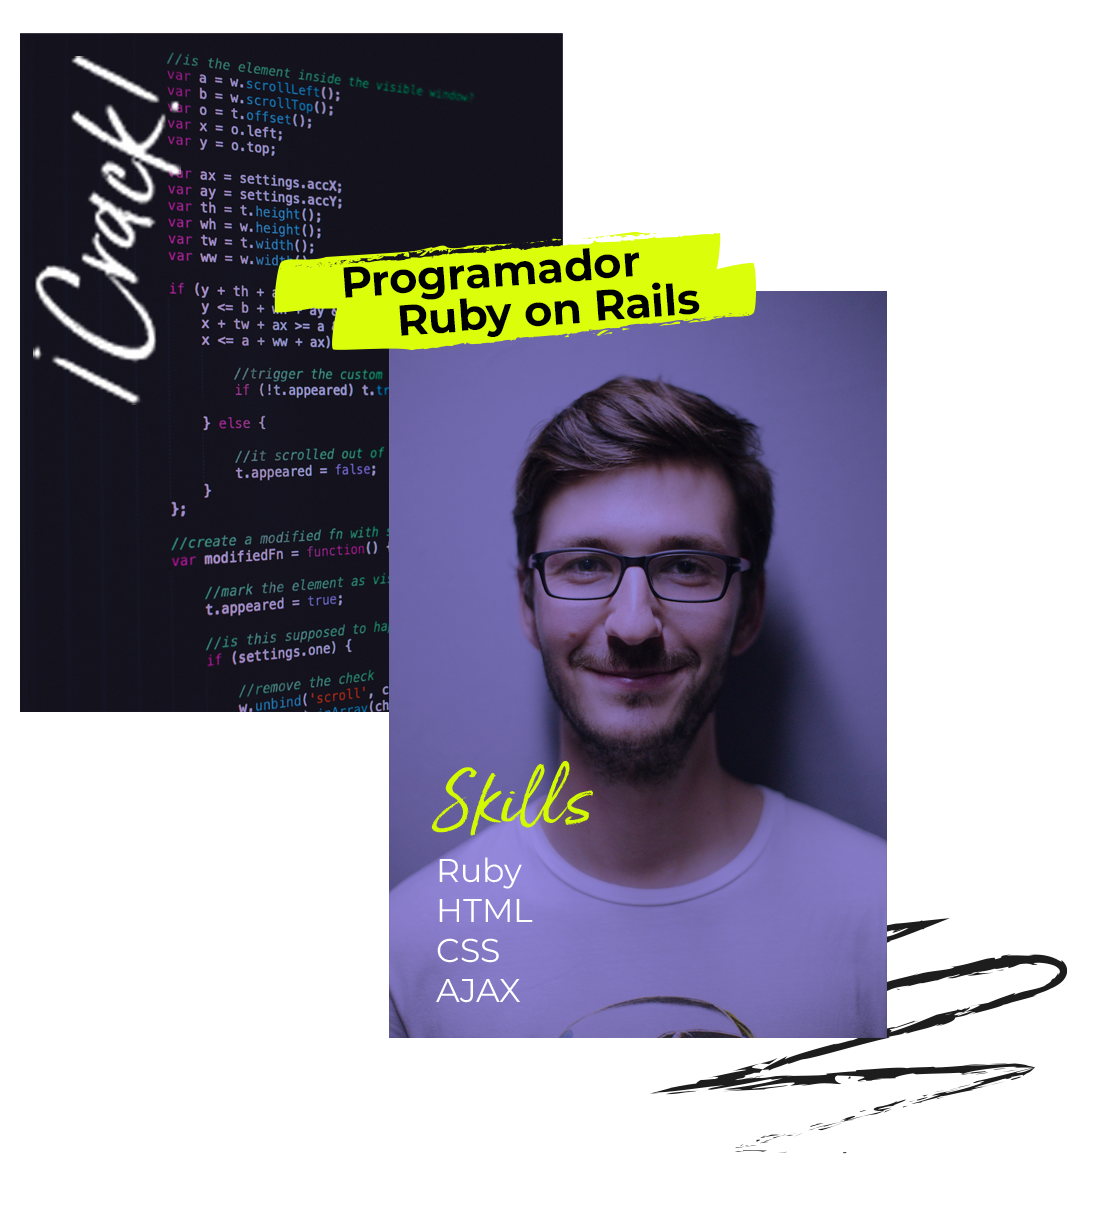 shakers_programador_ruby_on_rails